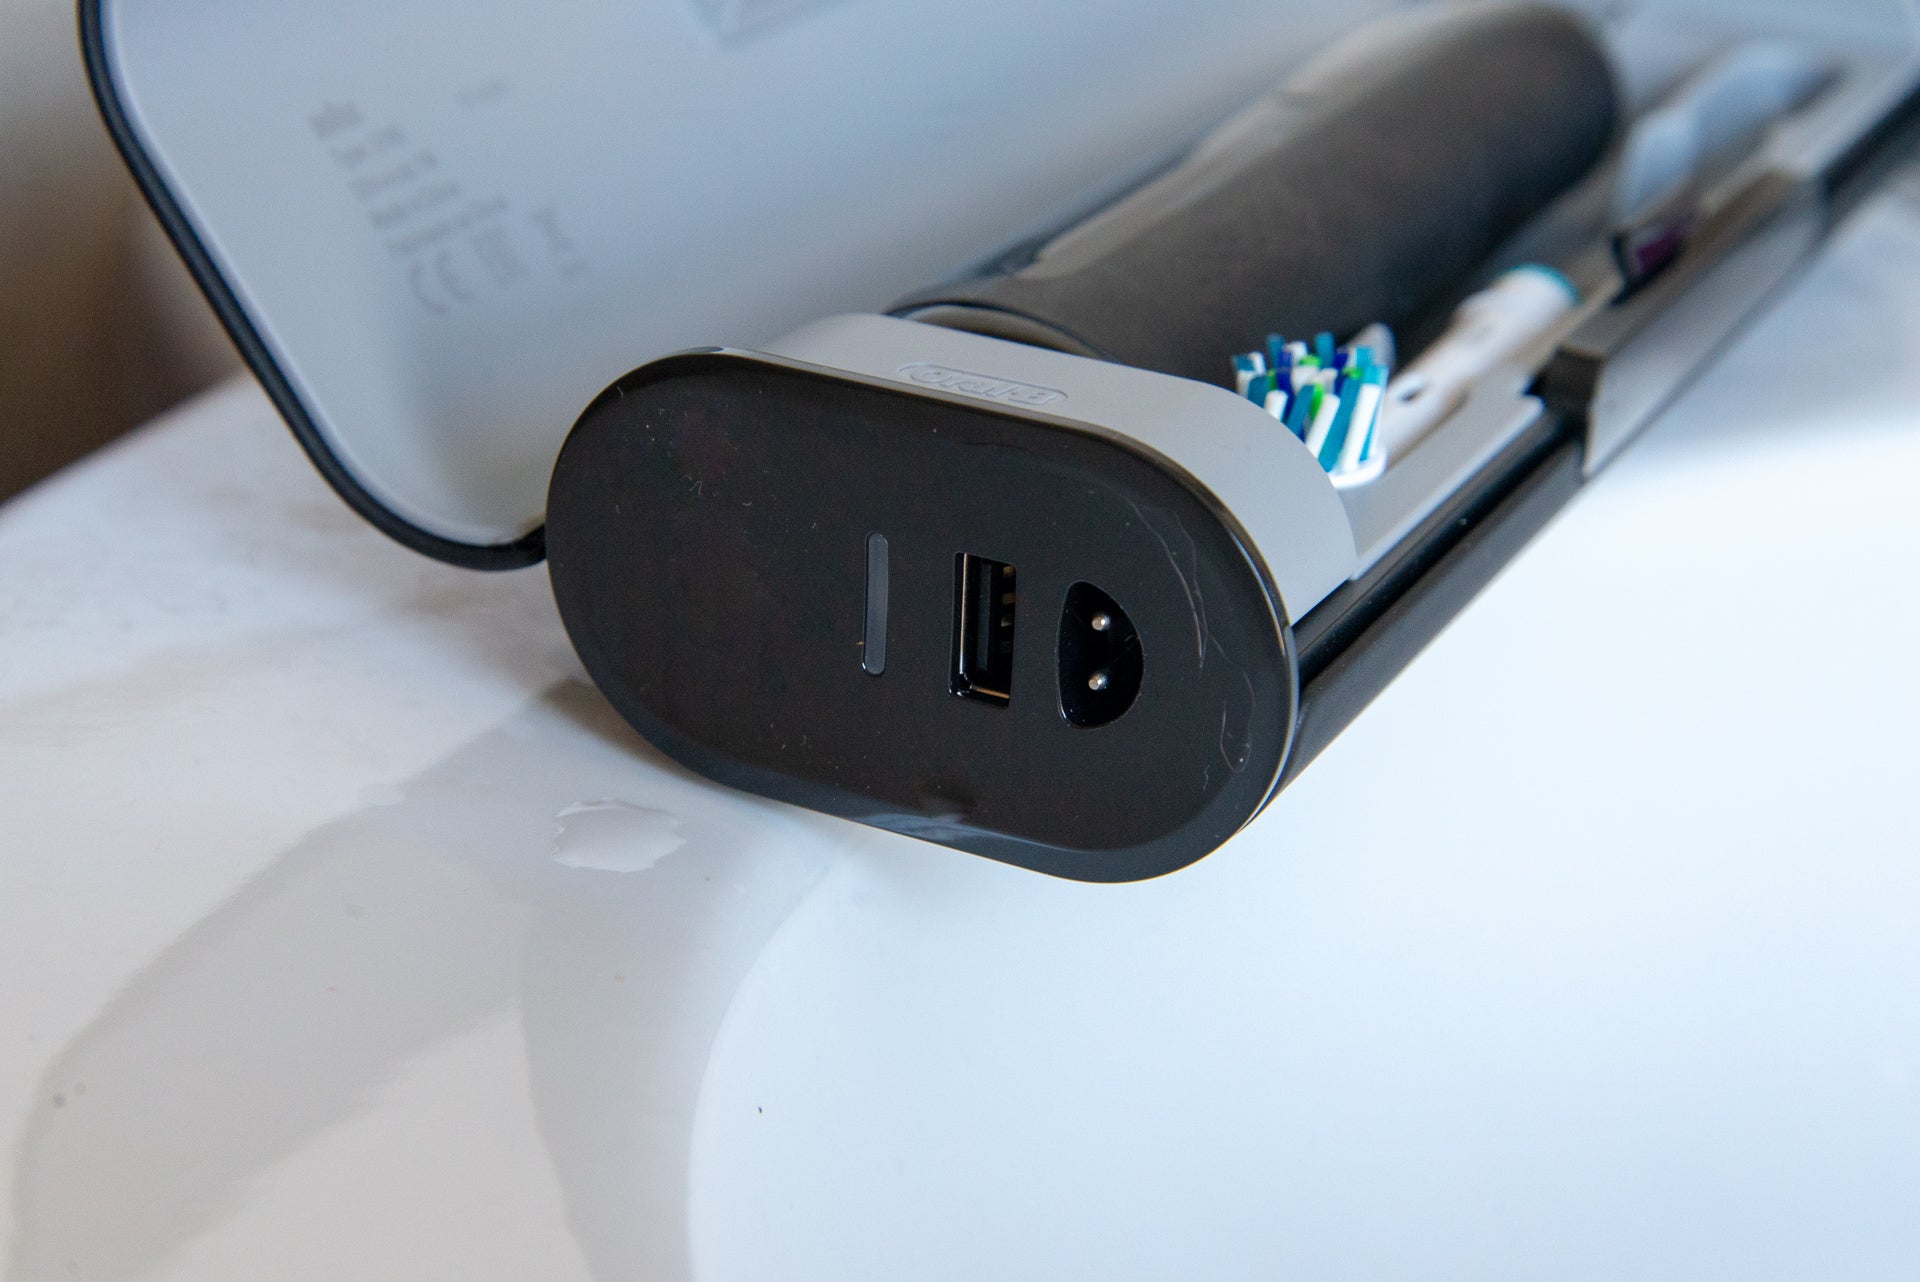 Oral-B Genius 9000 travel case USB port and charging port